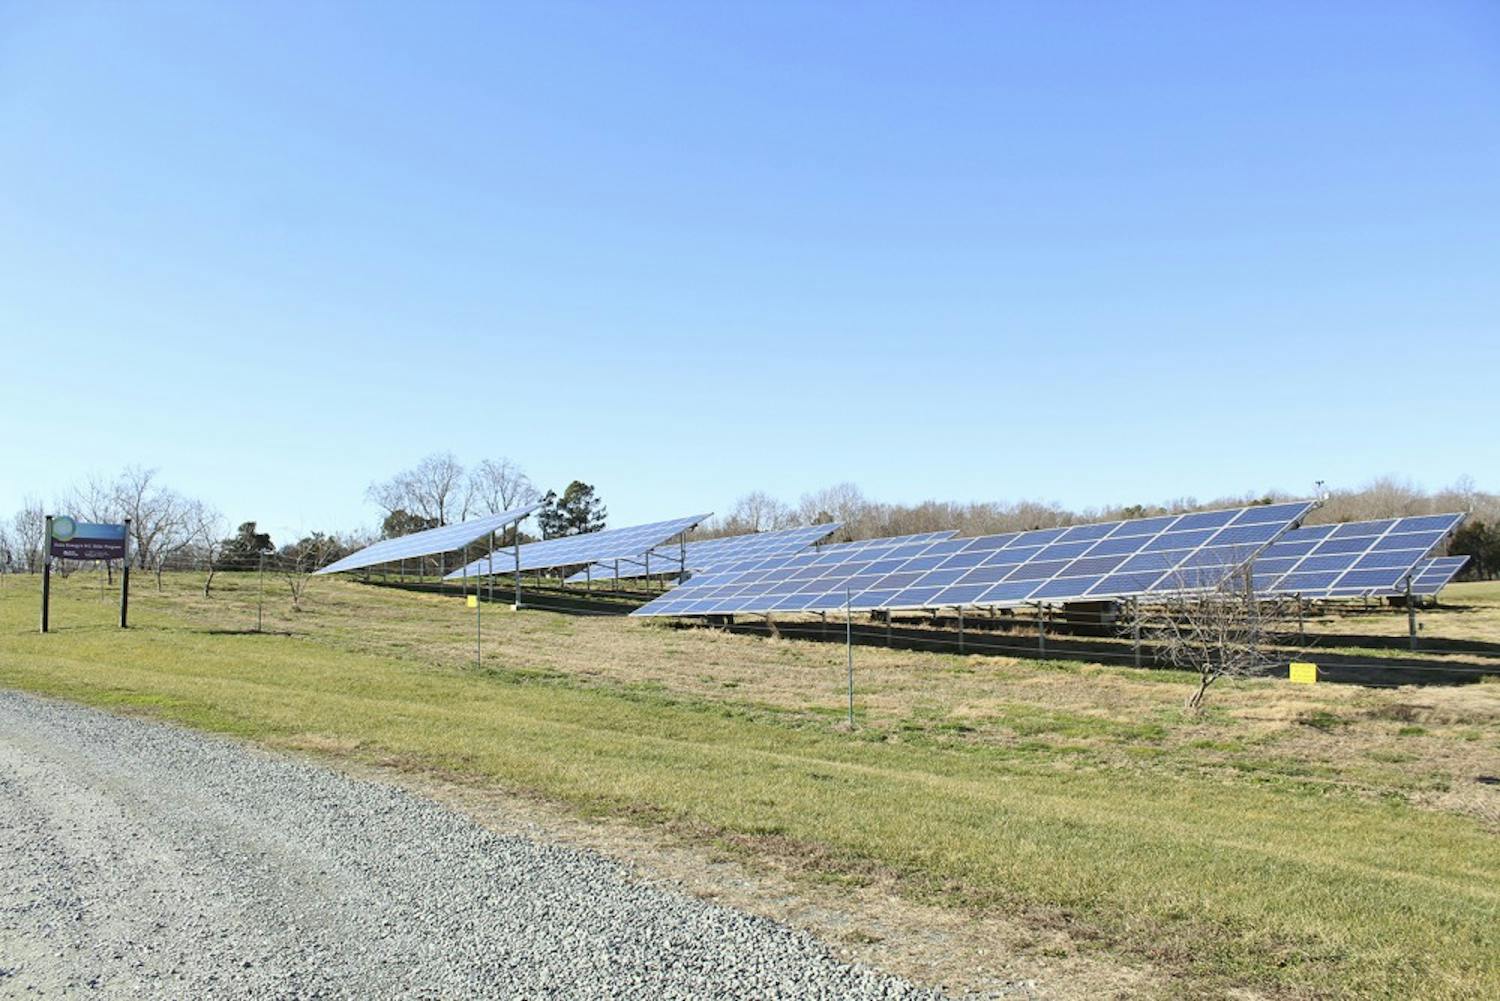 The solar panels near Maple View Farm are an example of the solar energy powered by Duke Energy.